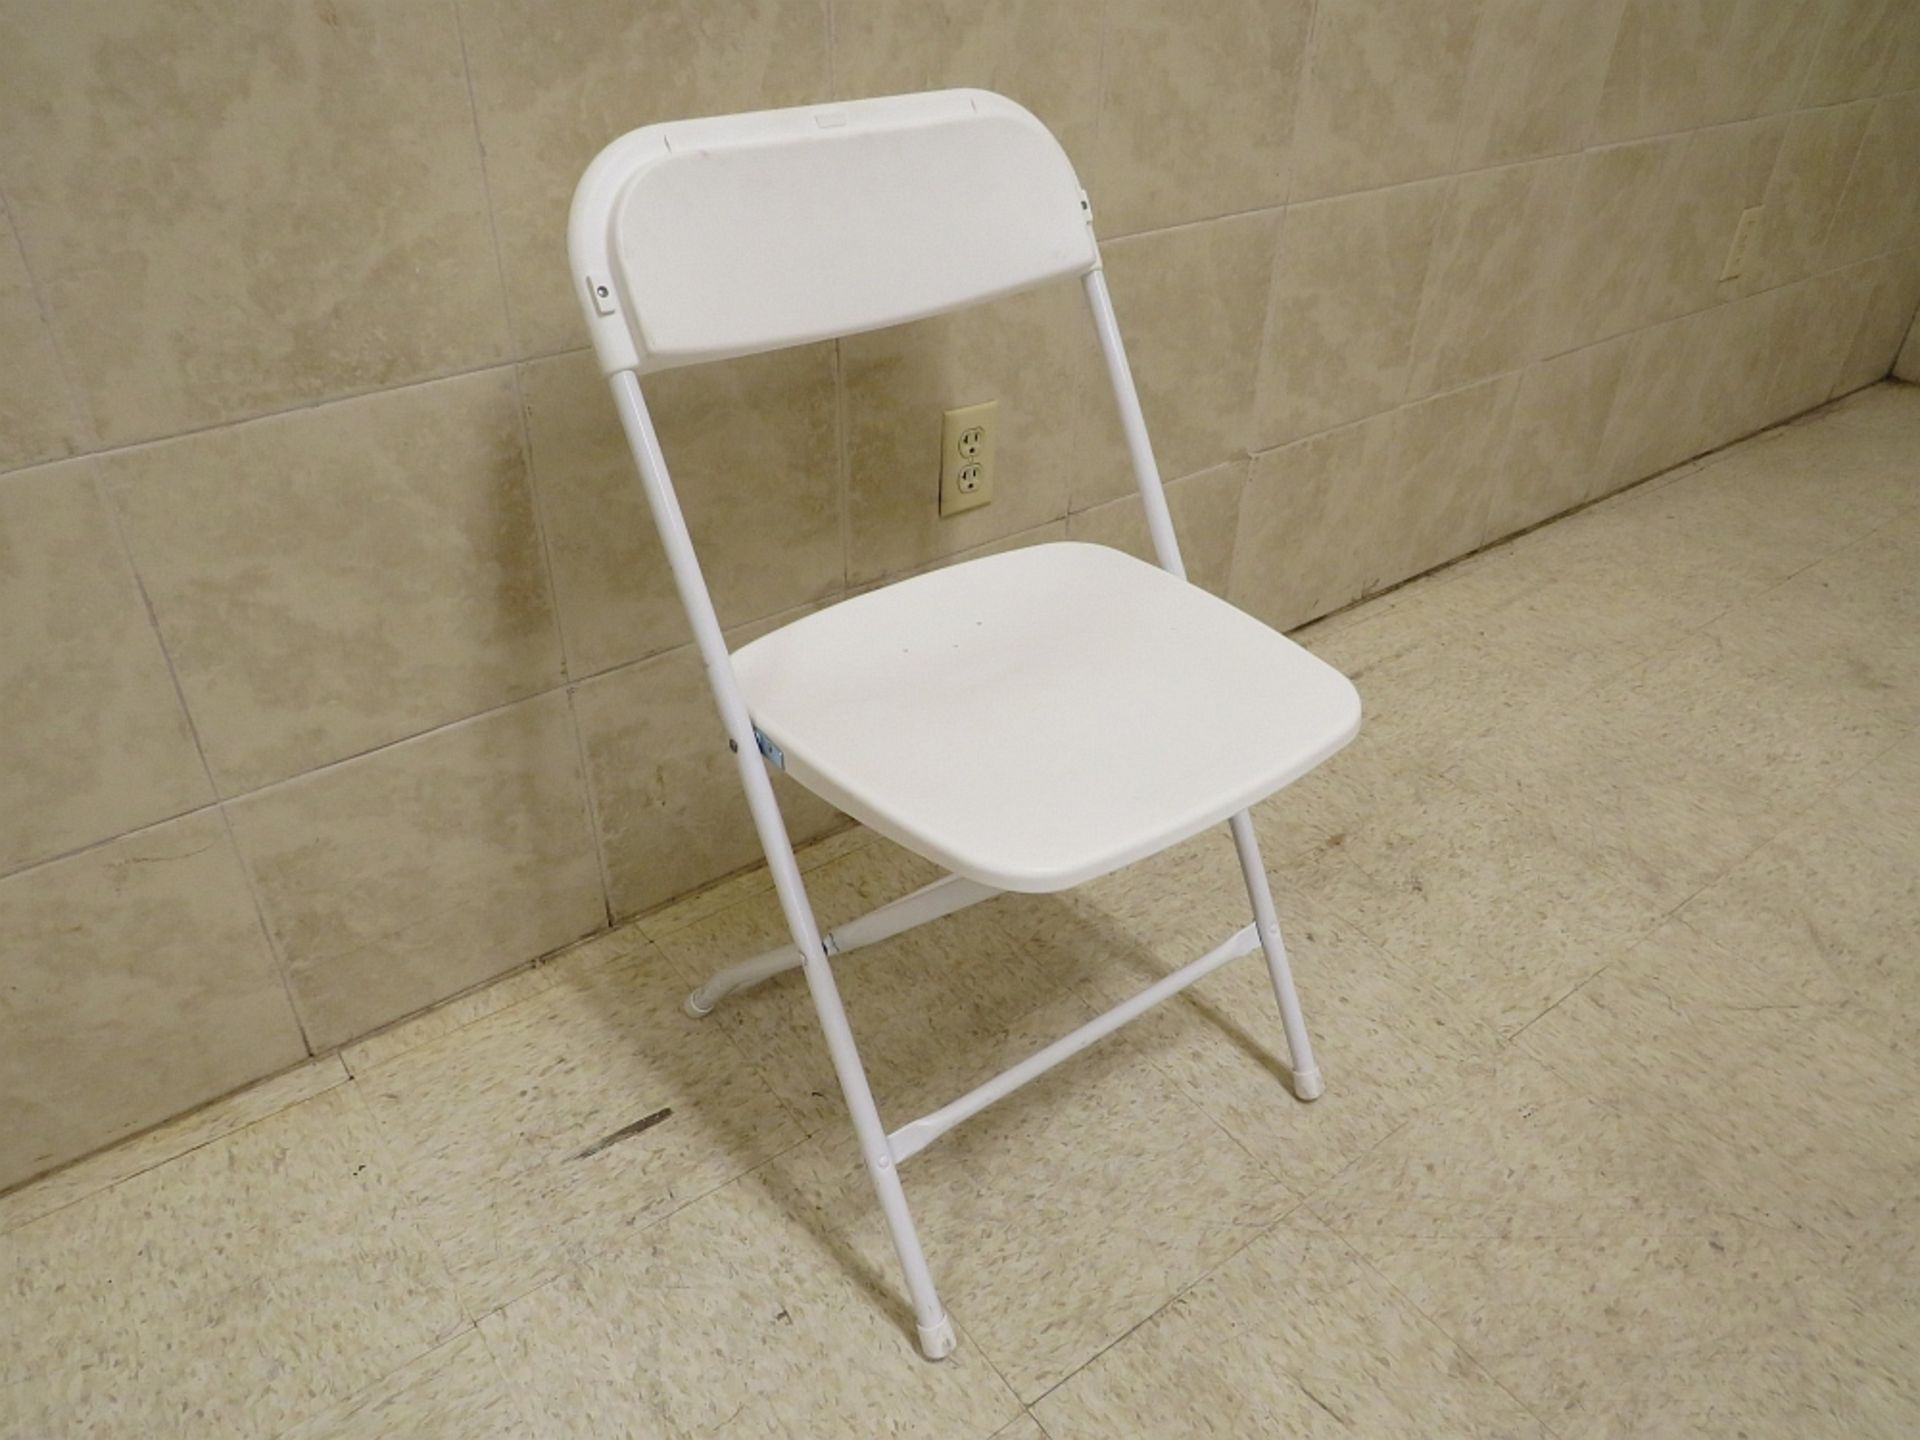 Chair - Standard White - Folding (*SL)